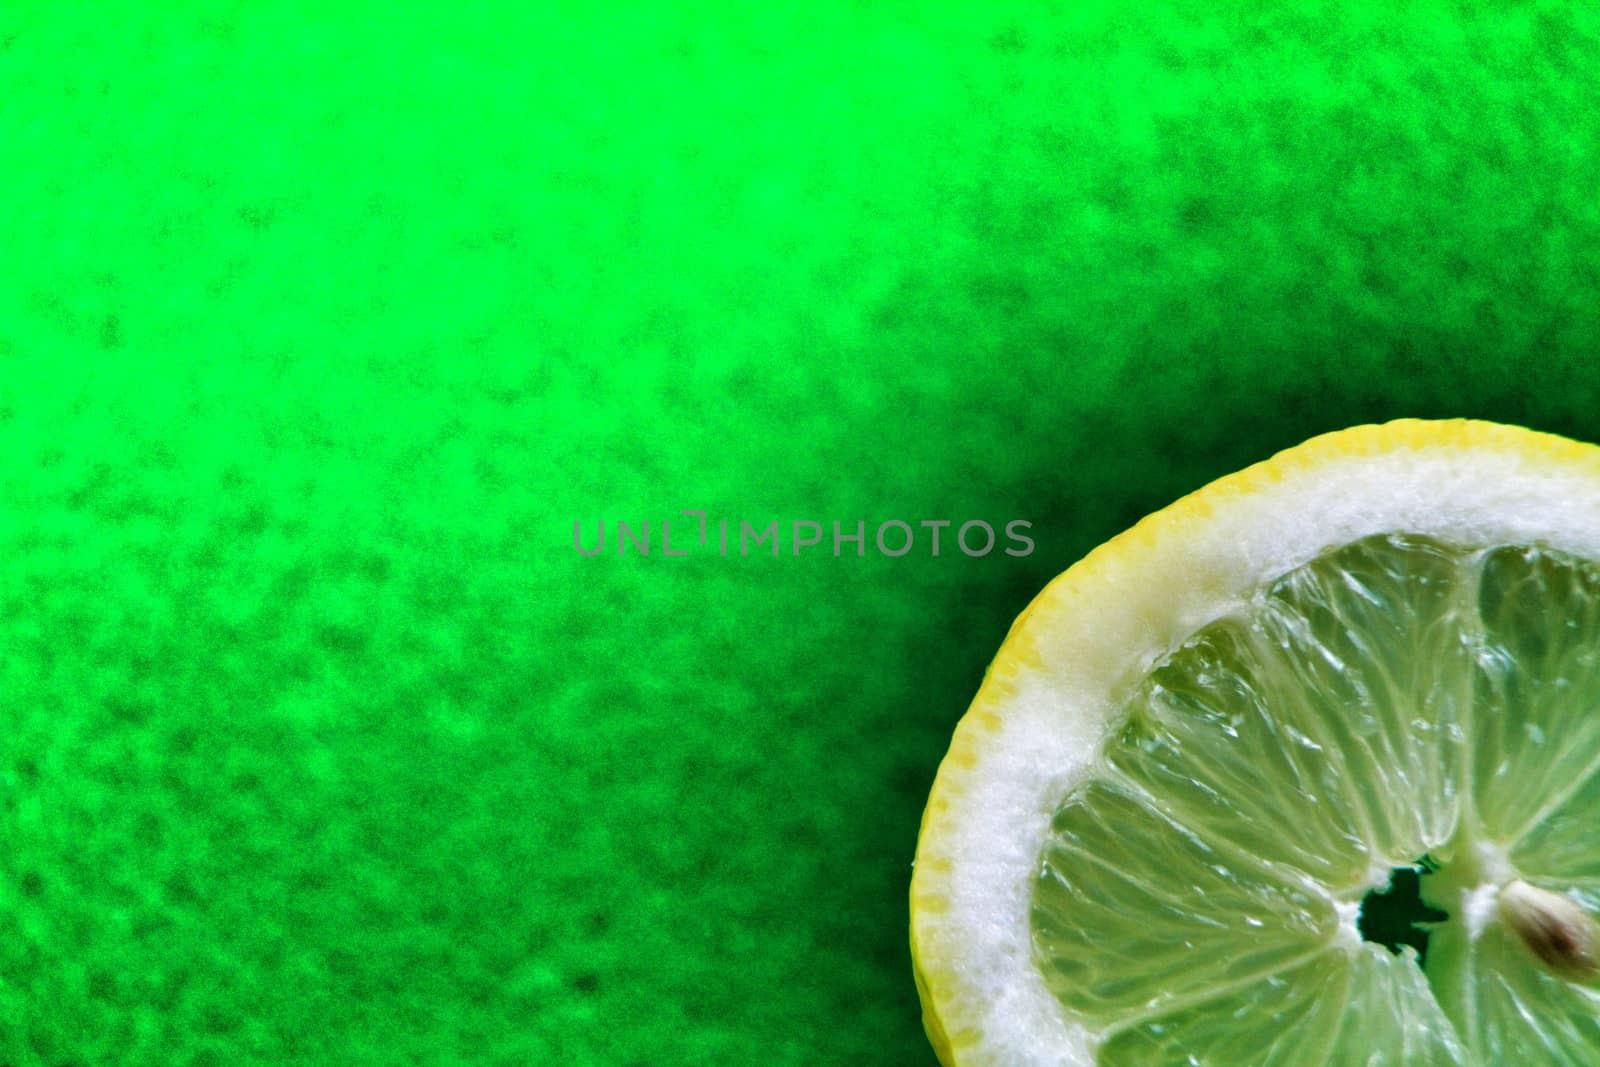 Slice of lemon on green background by soniabonet